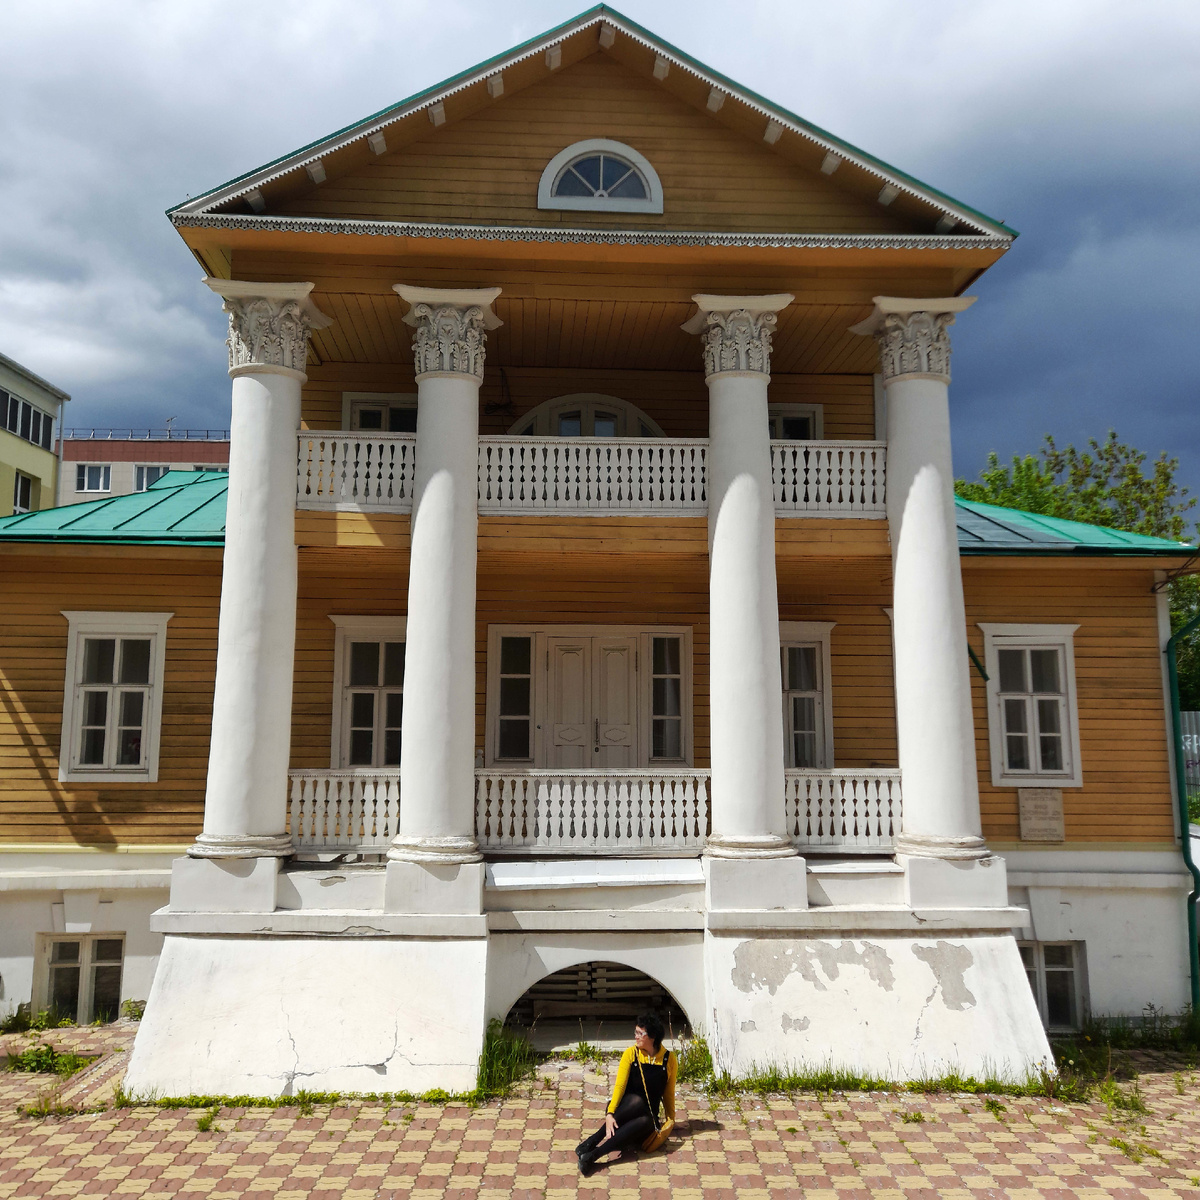 Калуга, «Дом хозяйки Муму», или Усадьба Толмачевых. Фото 2022 года.